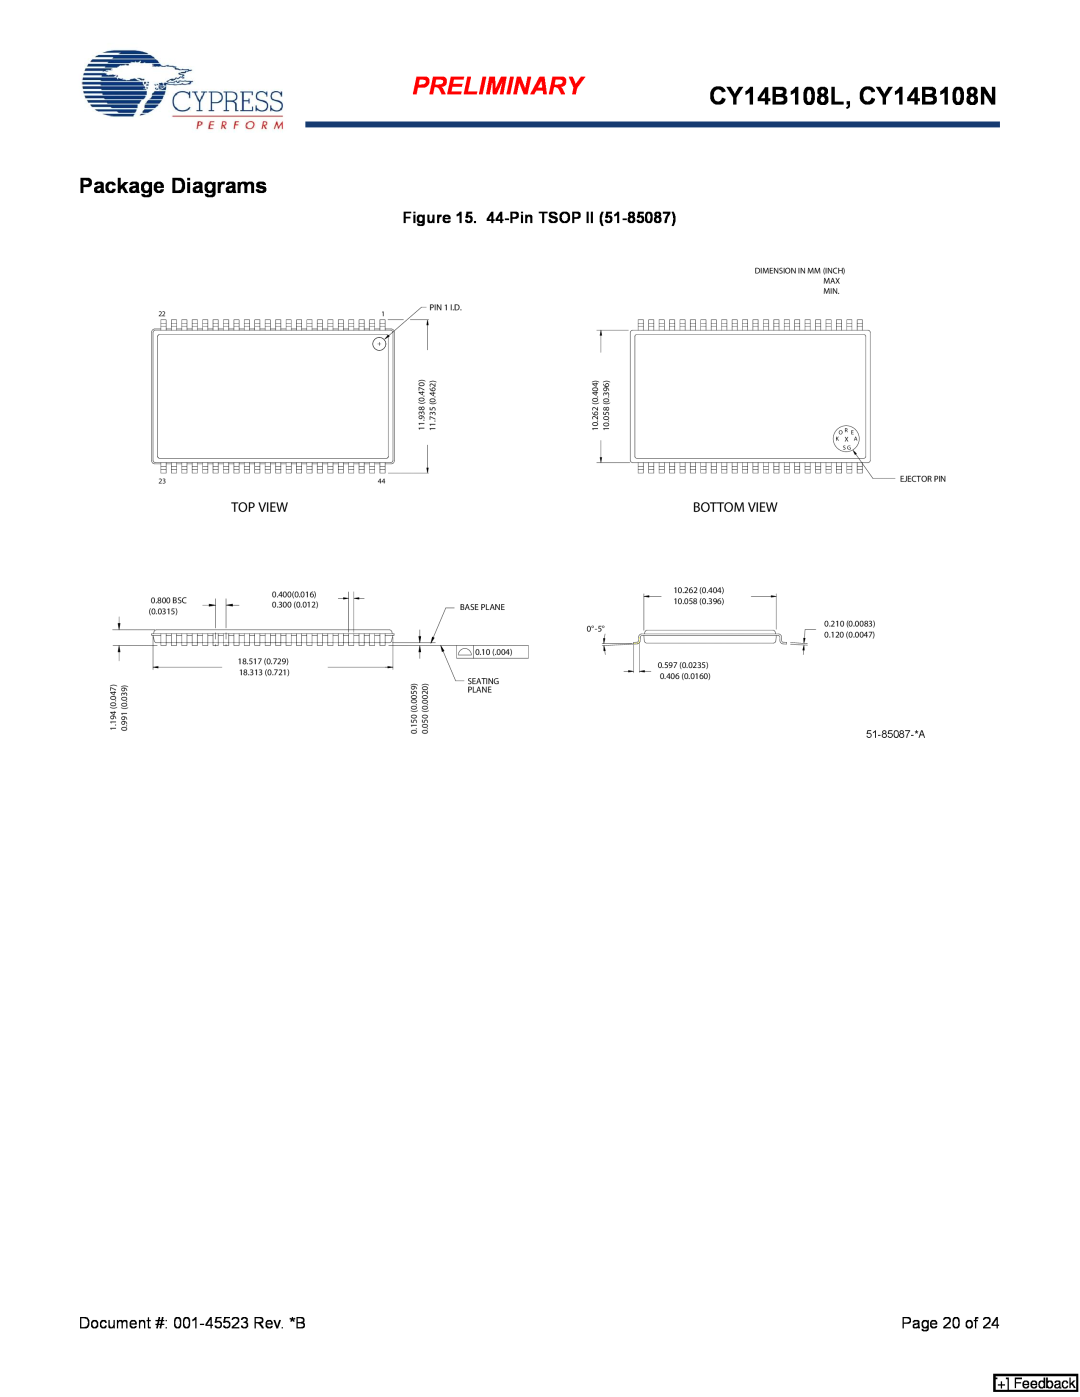 Cypress manual Package Diagrams, Preliminary, CY14B108L, CY14B108N, 44-Pin TSOP II, + Feedback 